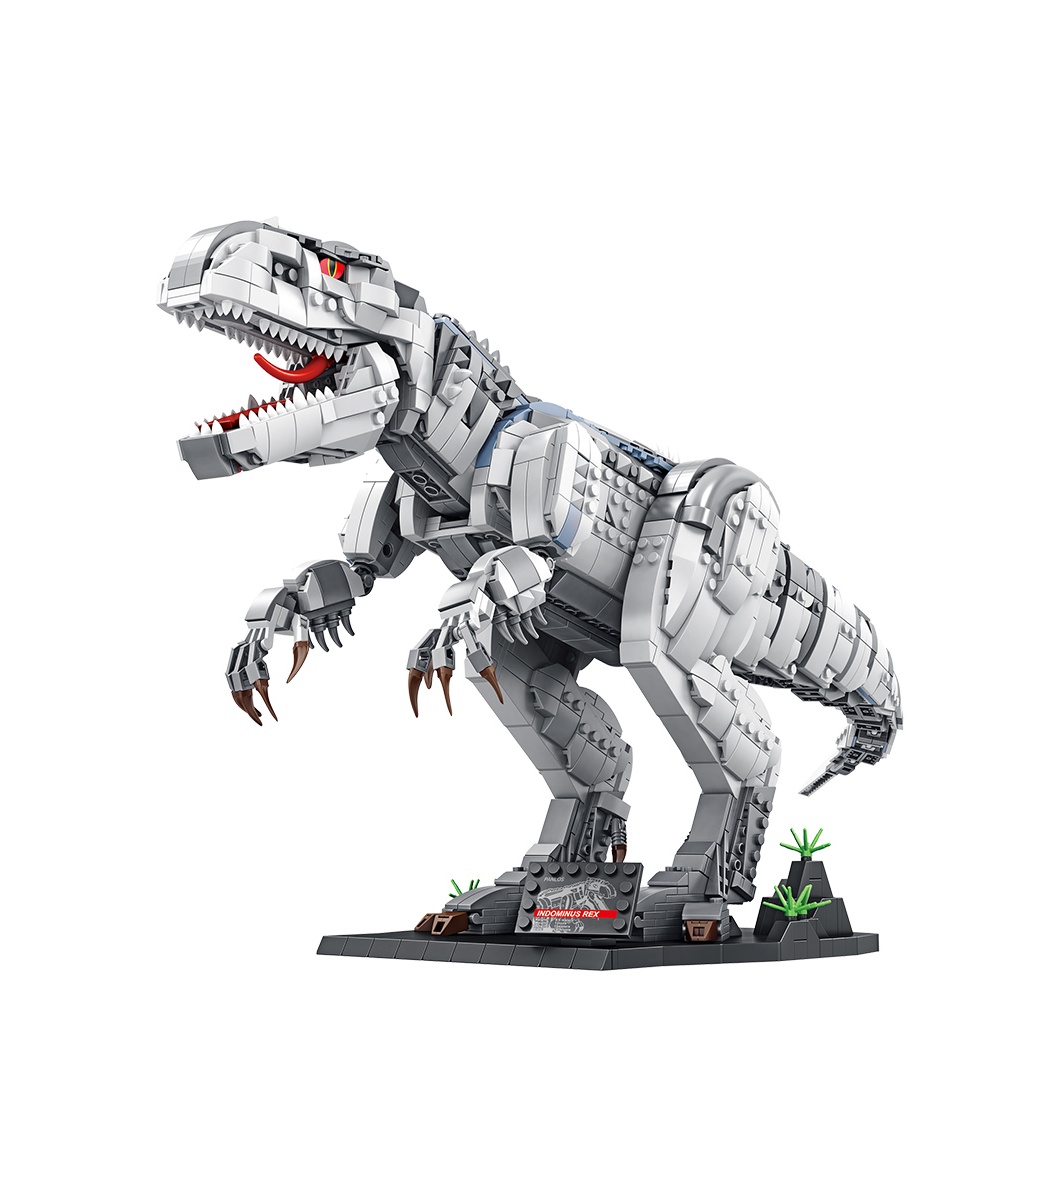 PANLOS 611002 Dinosaur World's Best Predator Tyrannosaurus